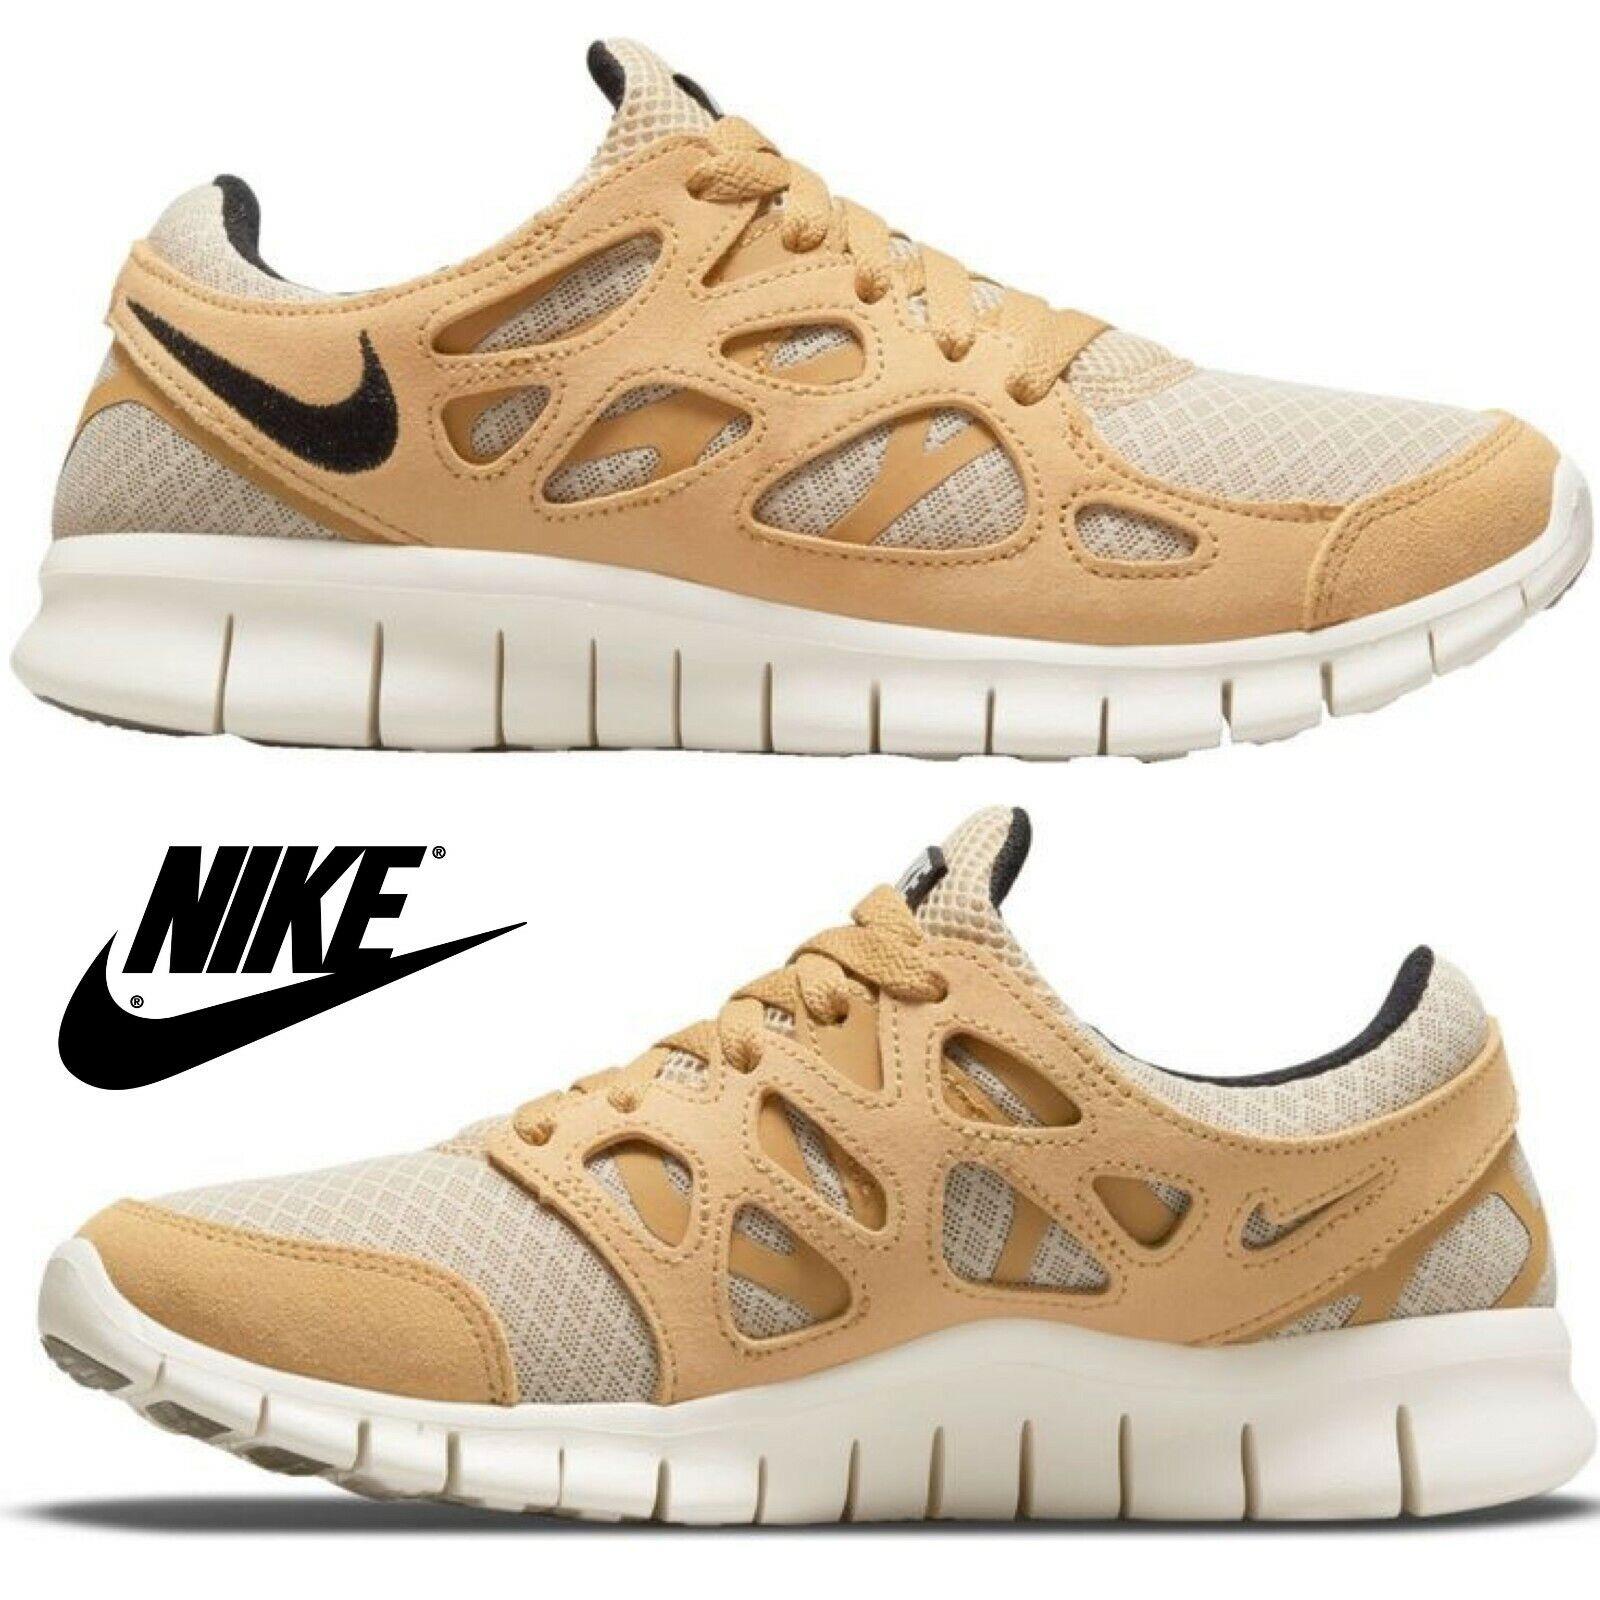 Nike Women`s Free Run 2 Shoes Casual Premium Running Sneakers Sport Gym Brown - Brown , RATTAN/BLACK/WHEAT/TWINE Manufacturer